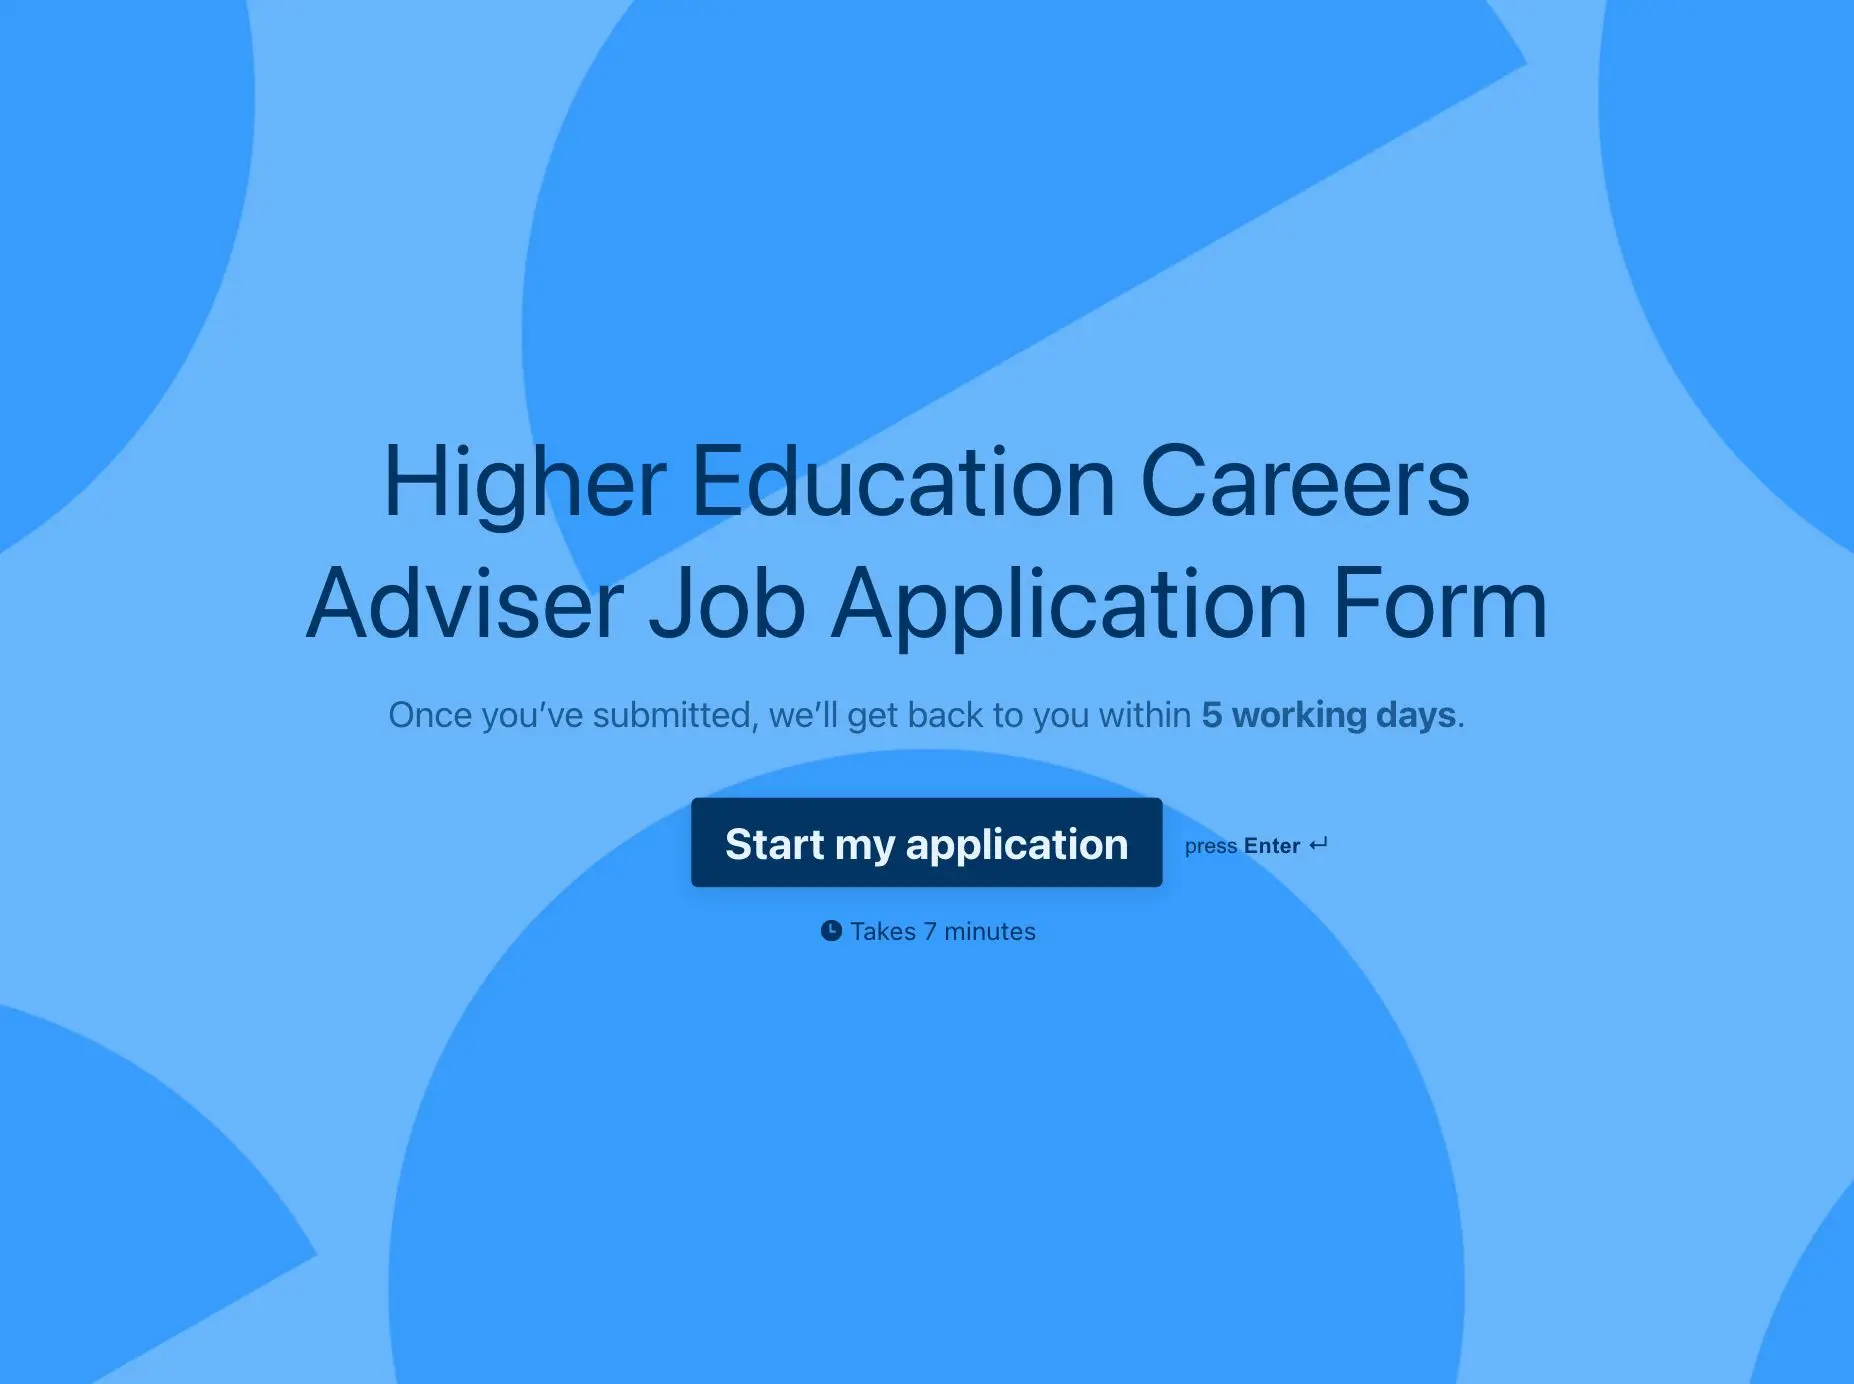 Higher Education Careers Adviser Job Application Form Template Hero